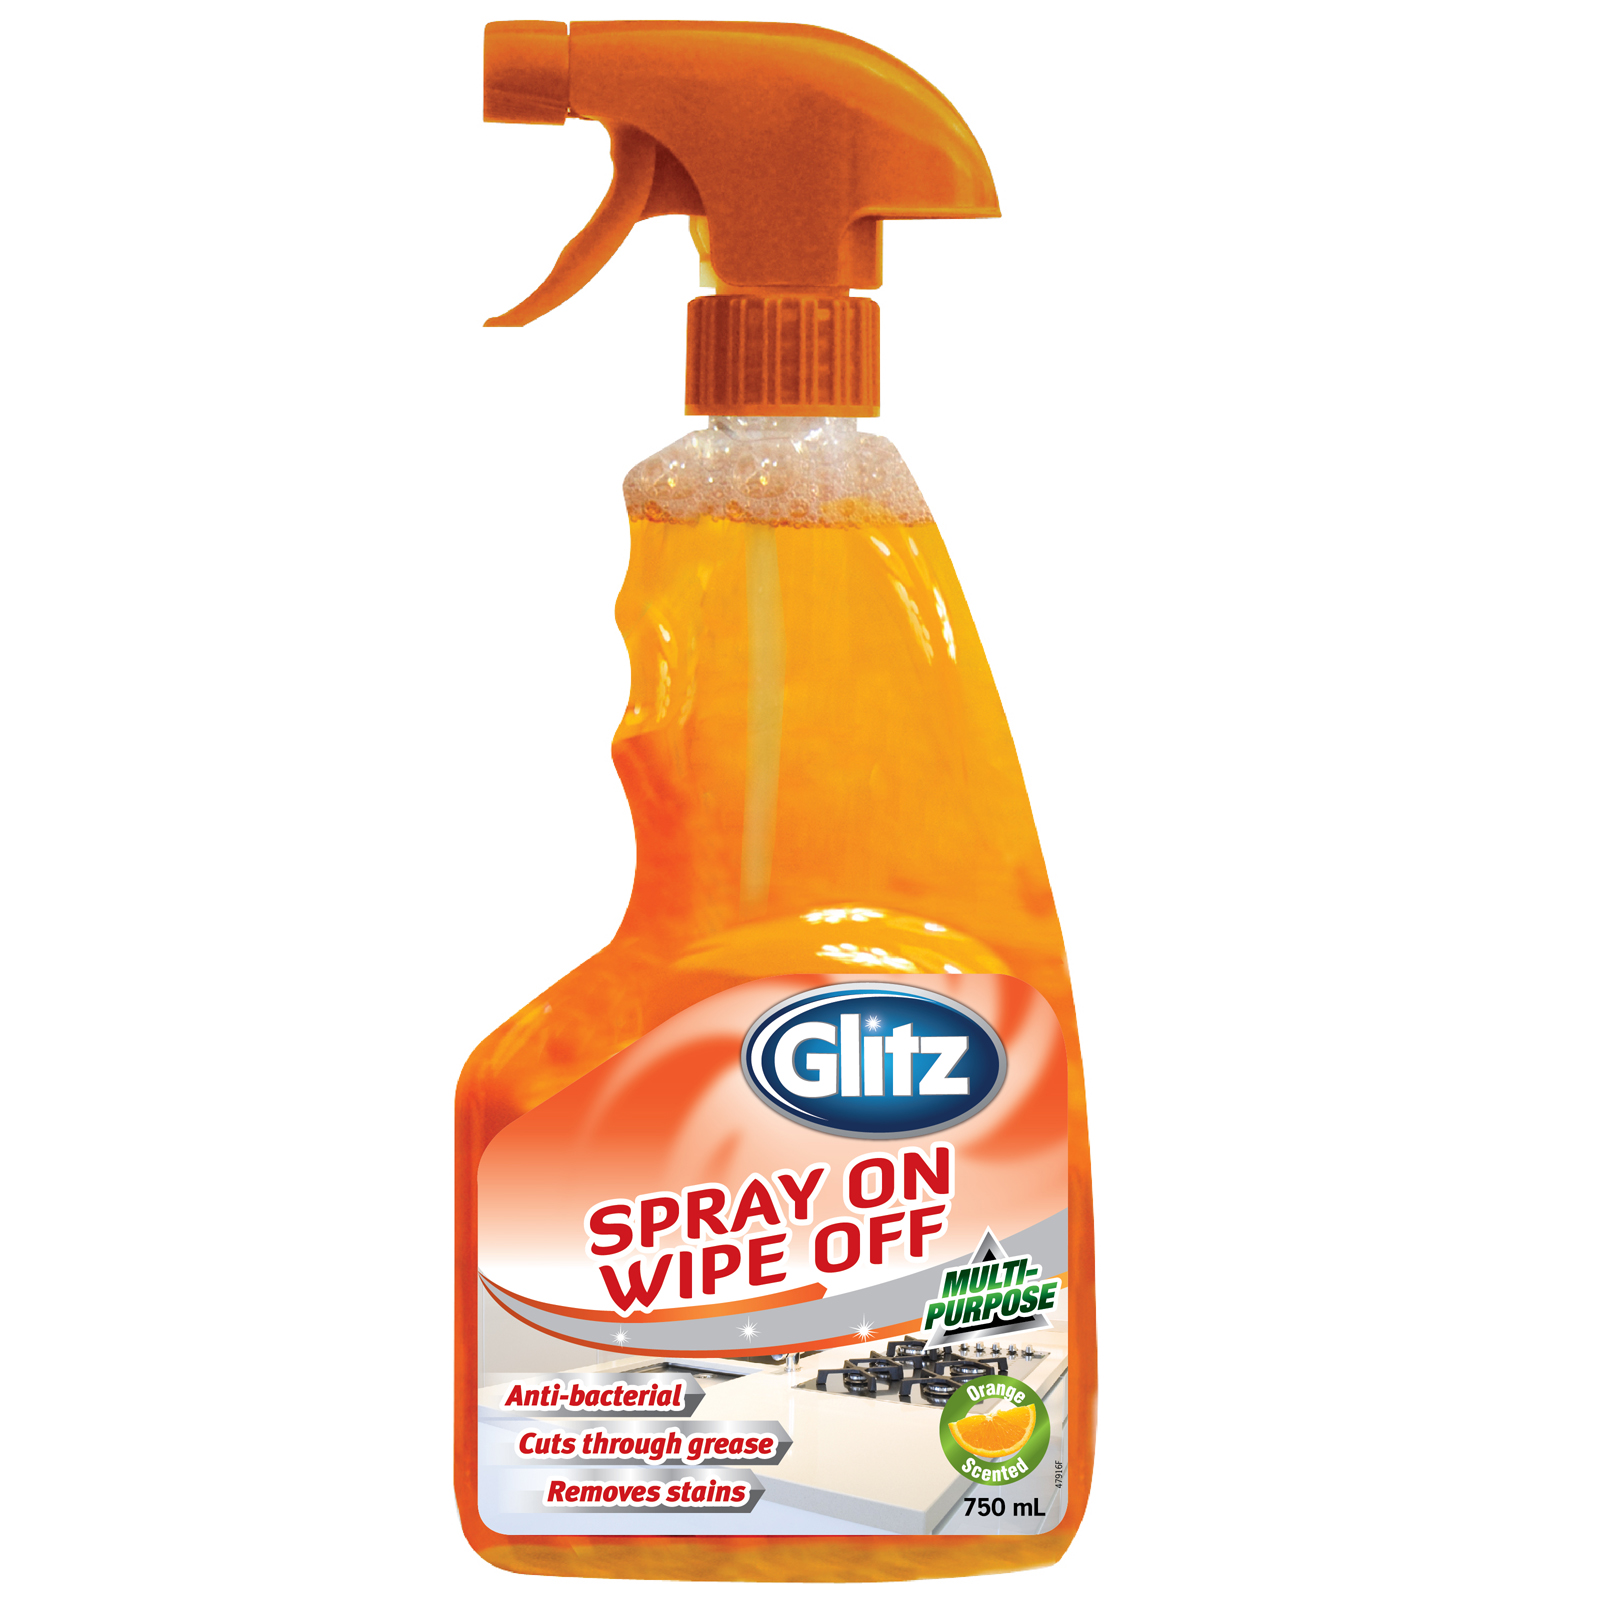 Glitz 750ml Spray on Wipe Off